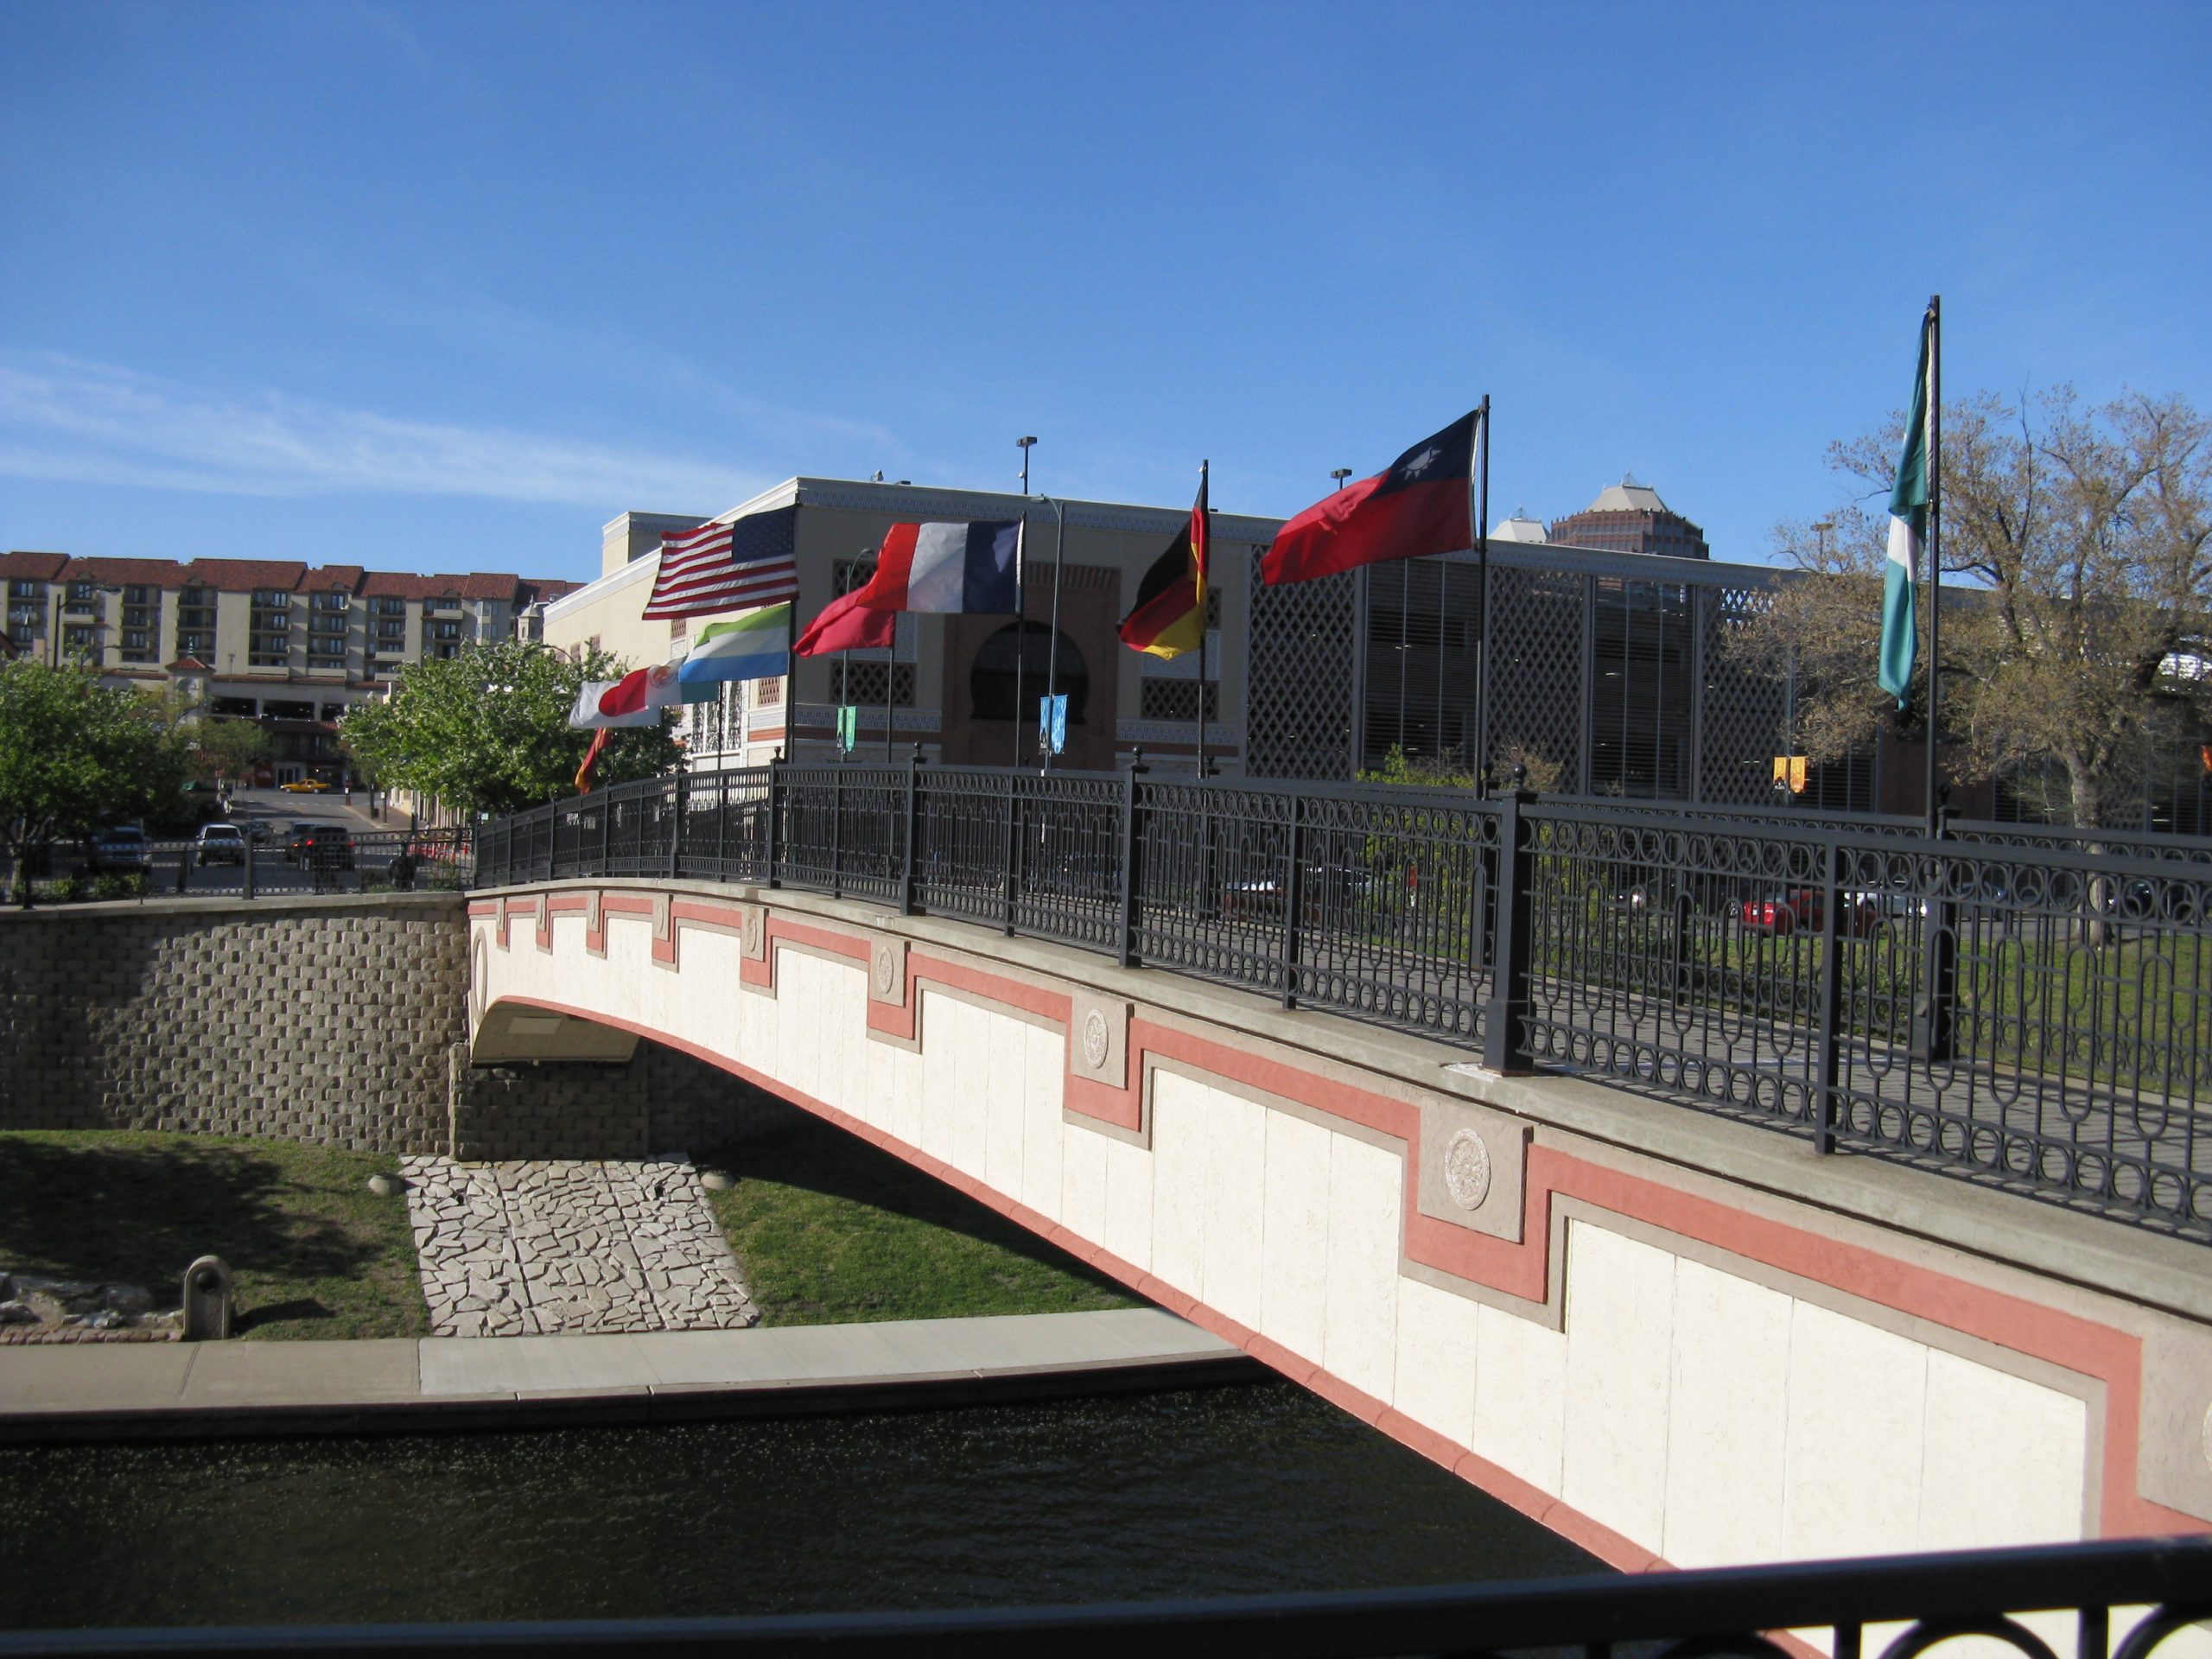 Sister Cities International Bridge Plaza